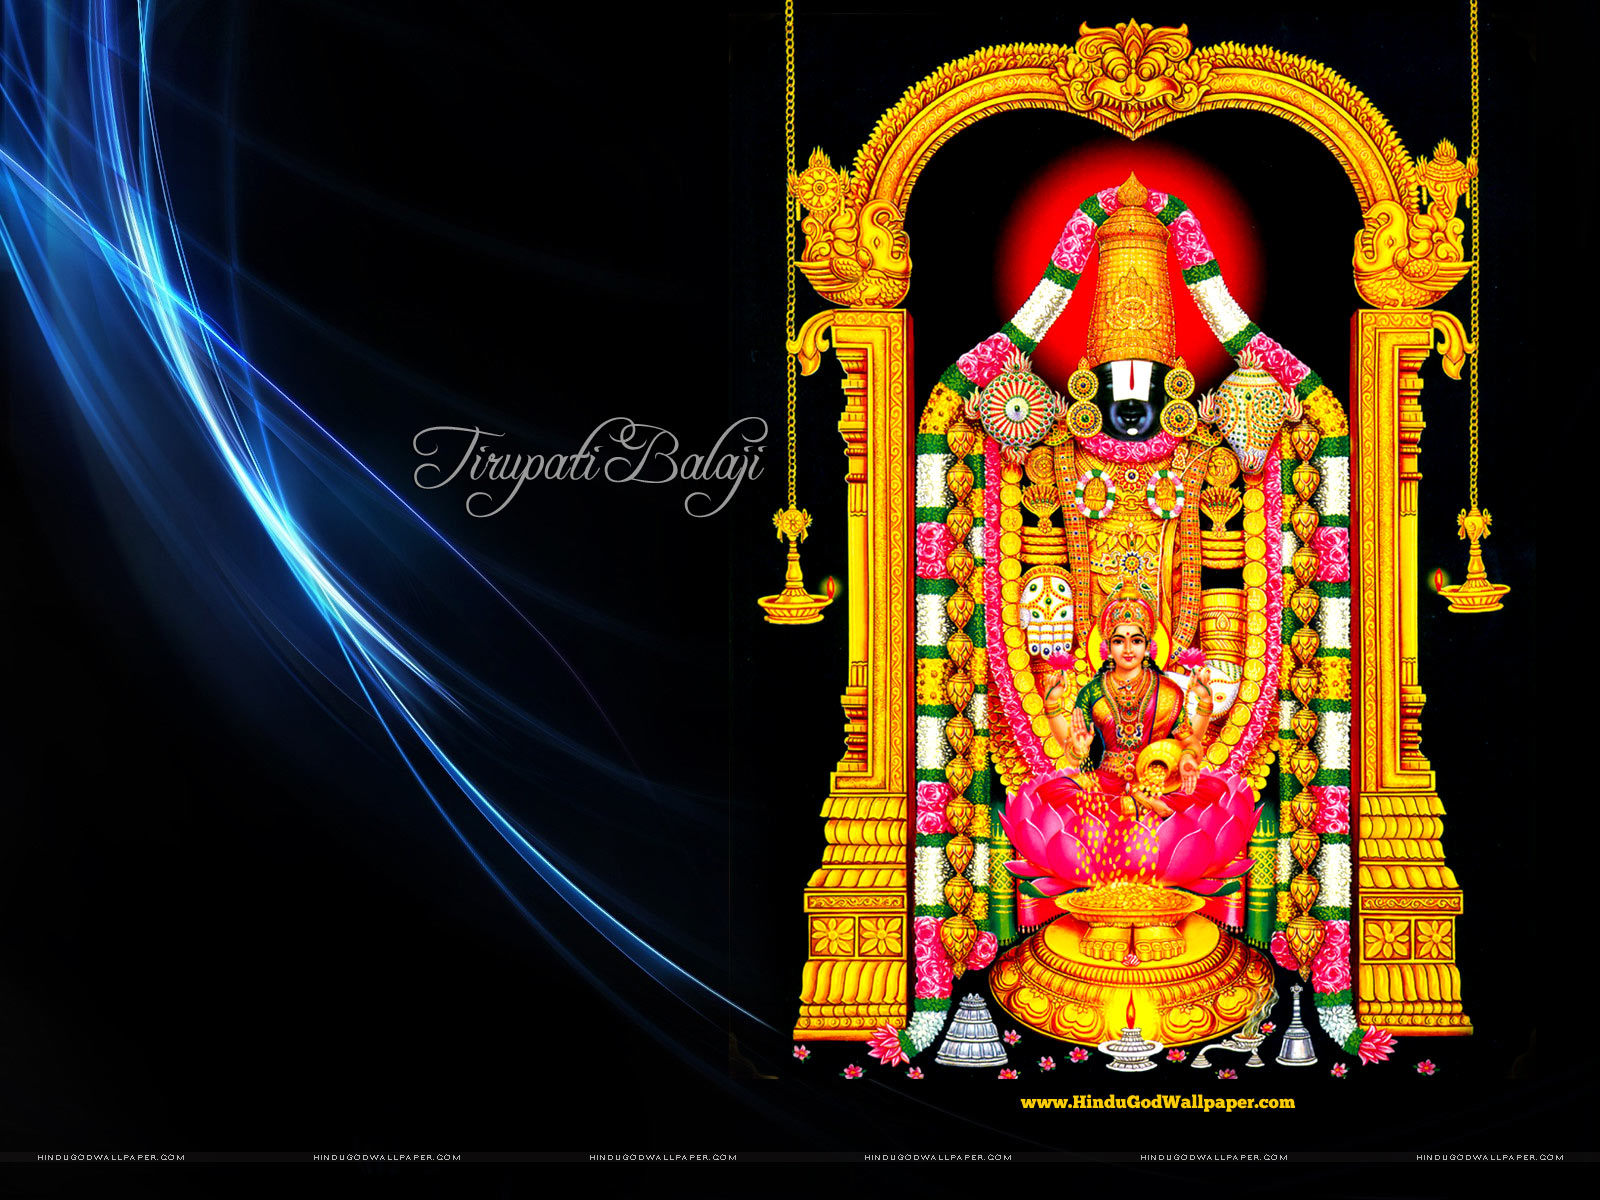 Tirupati Balaji Live Wallpaper Free Download